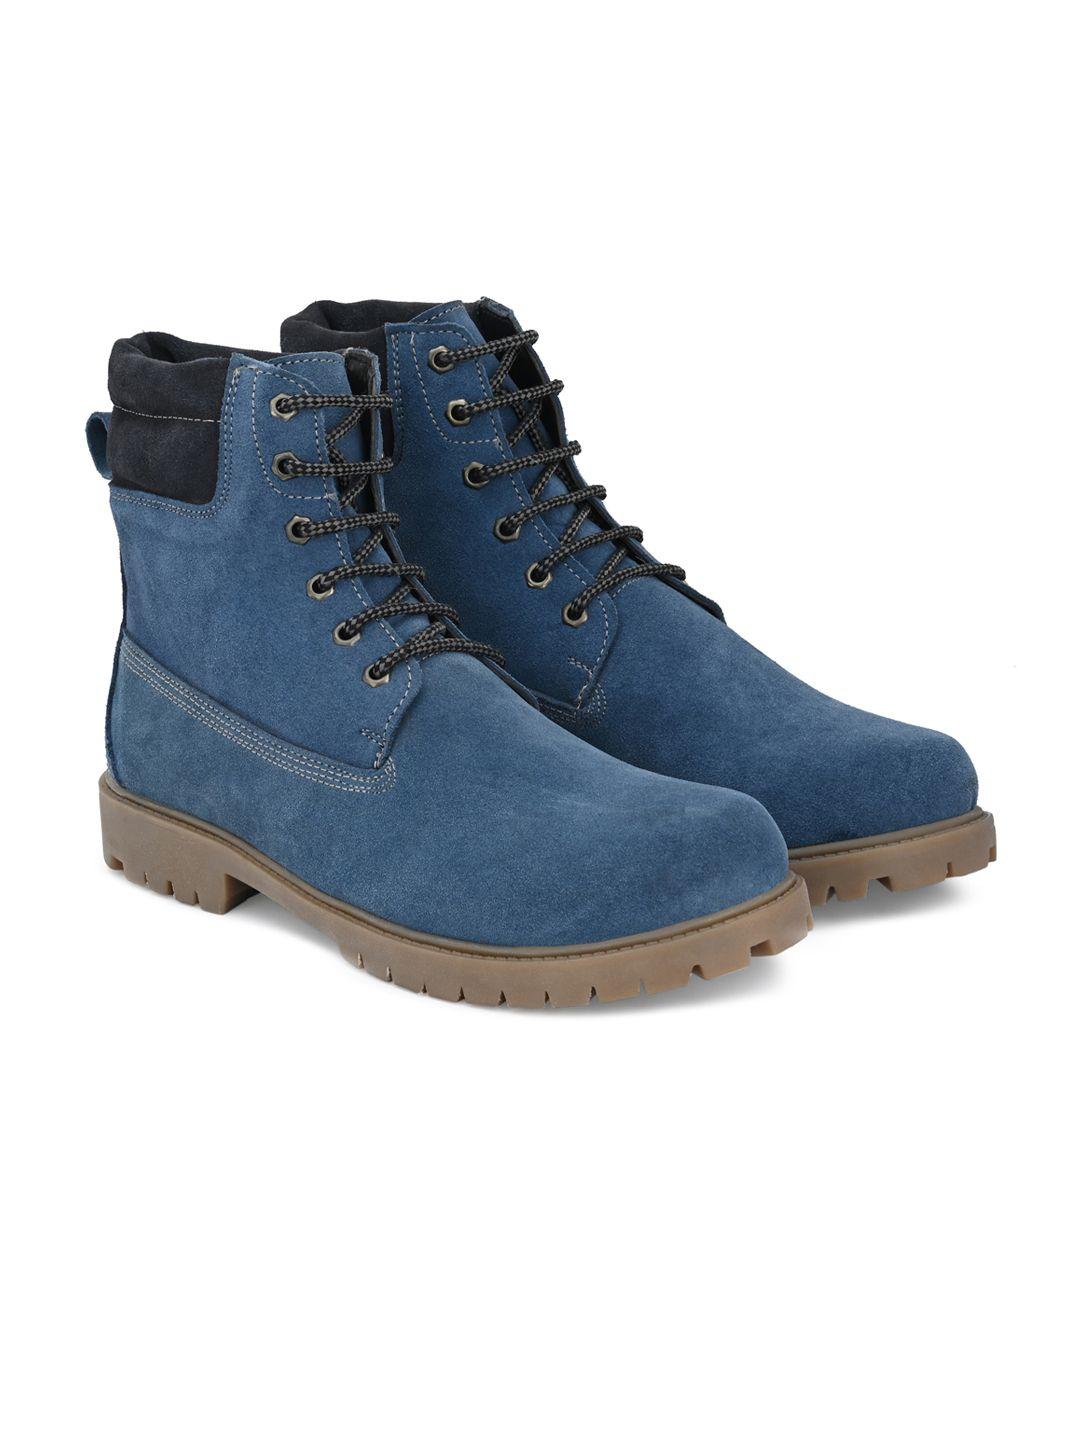 shences men blue leather flat boots